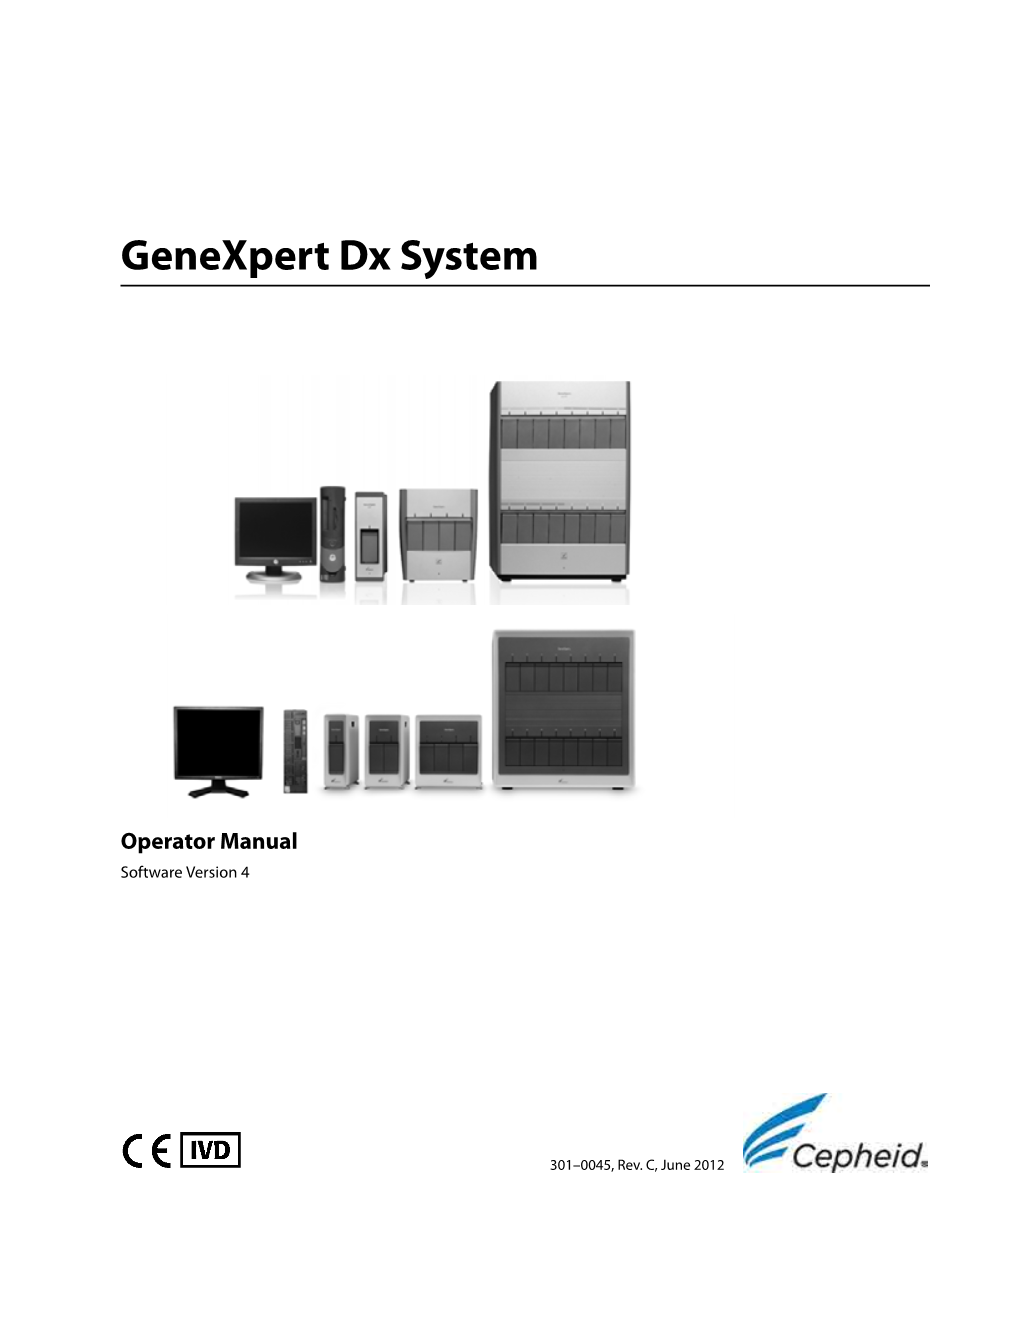 301-0045 Rev C Version 4 GX Dx Operator Manual.Book